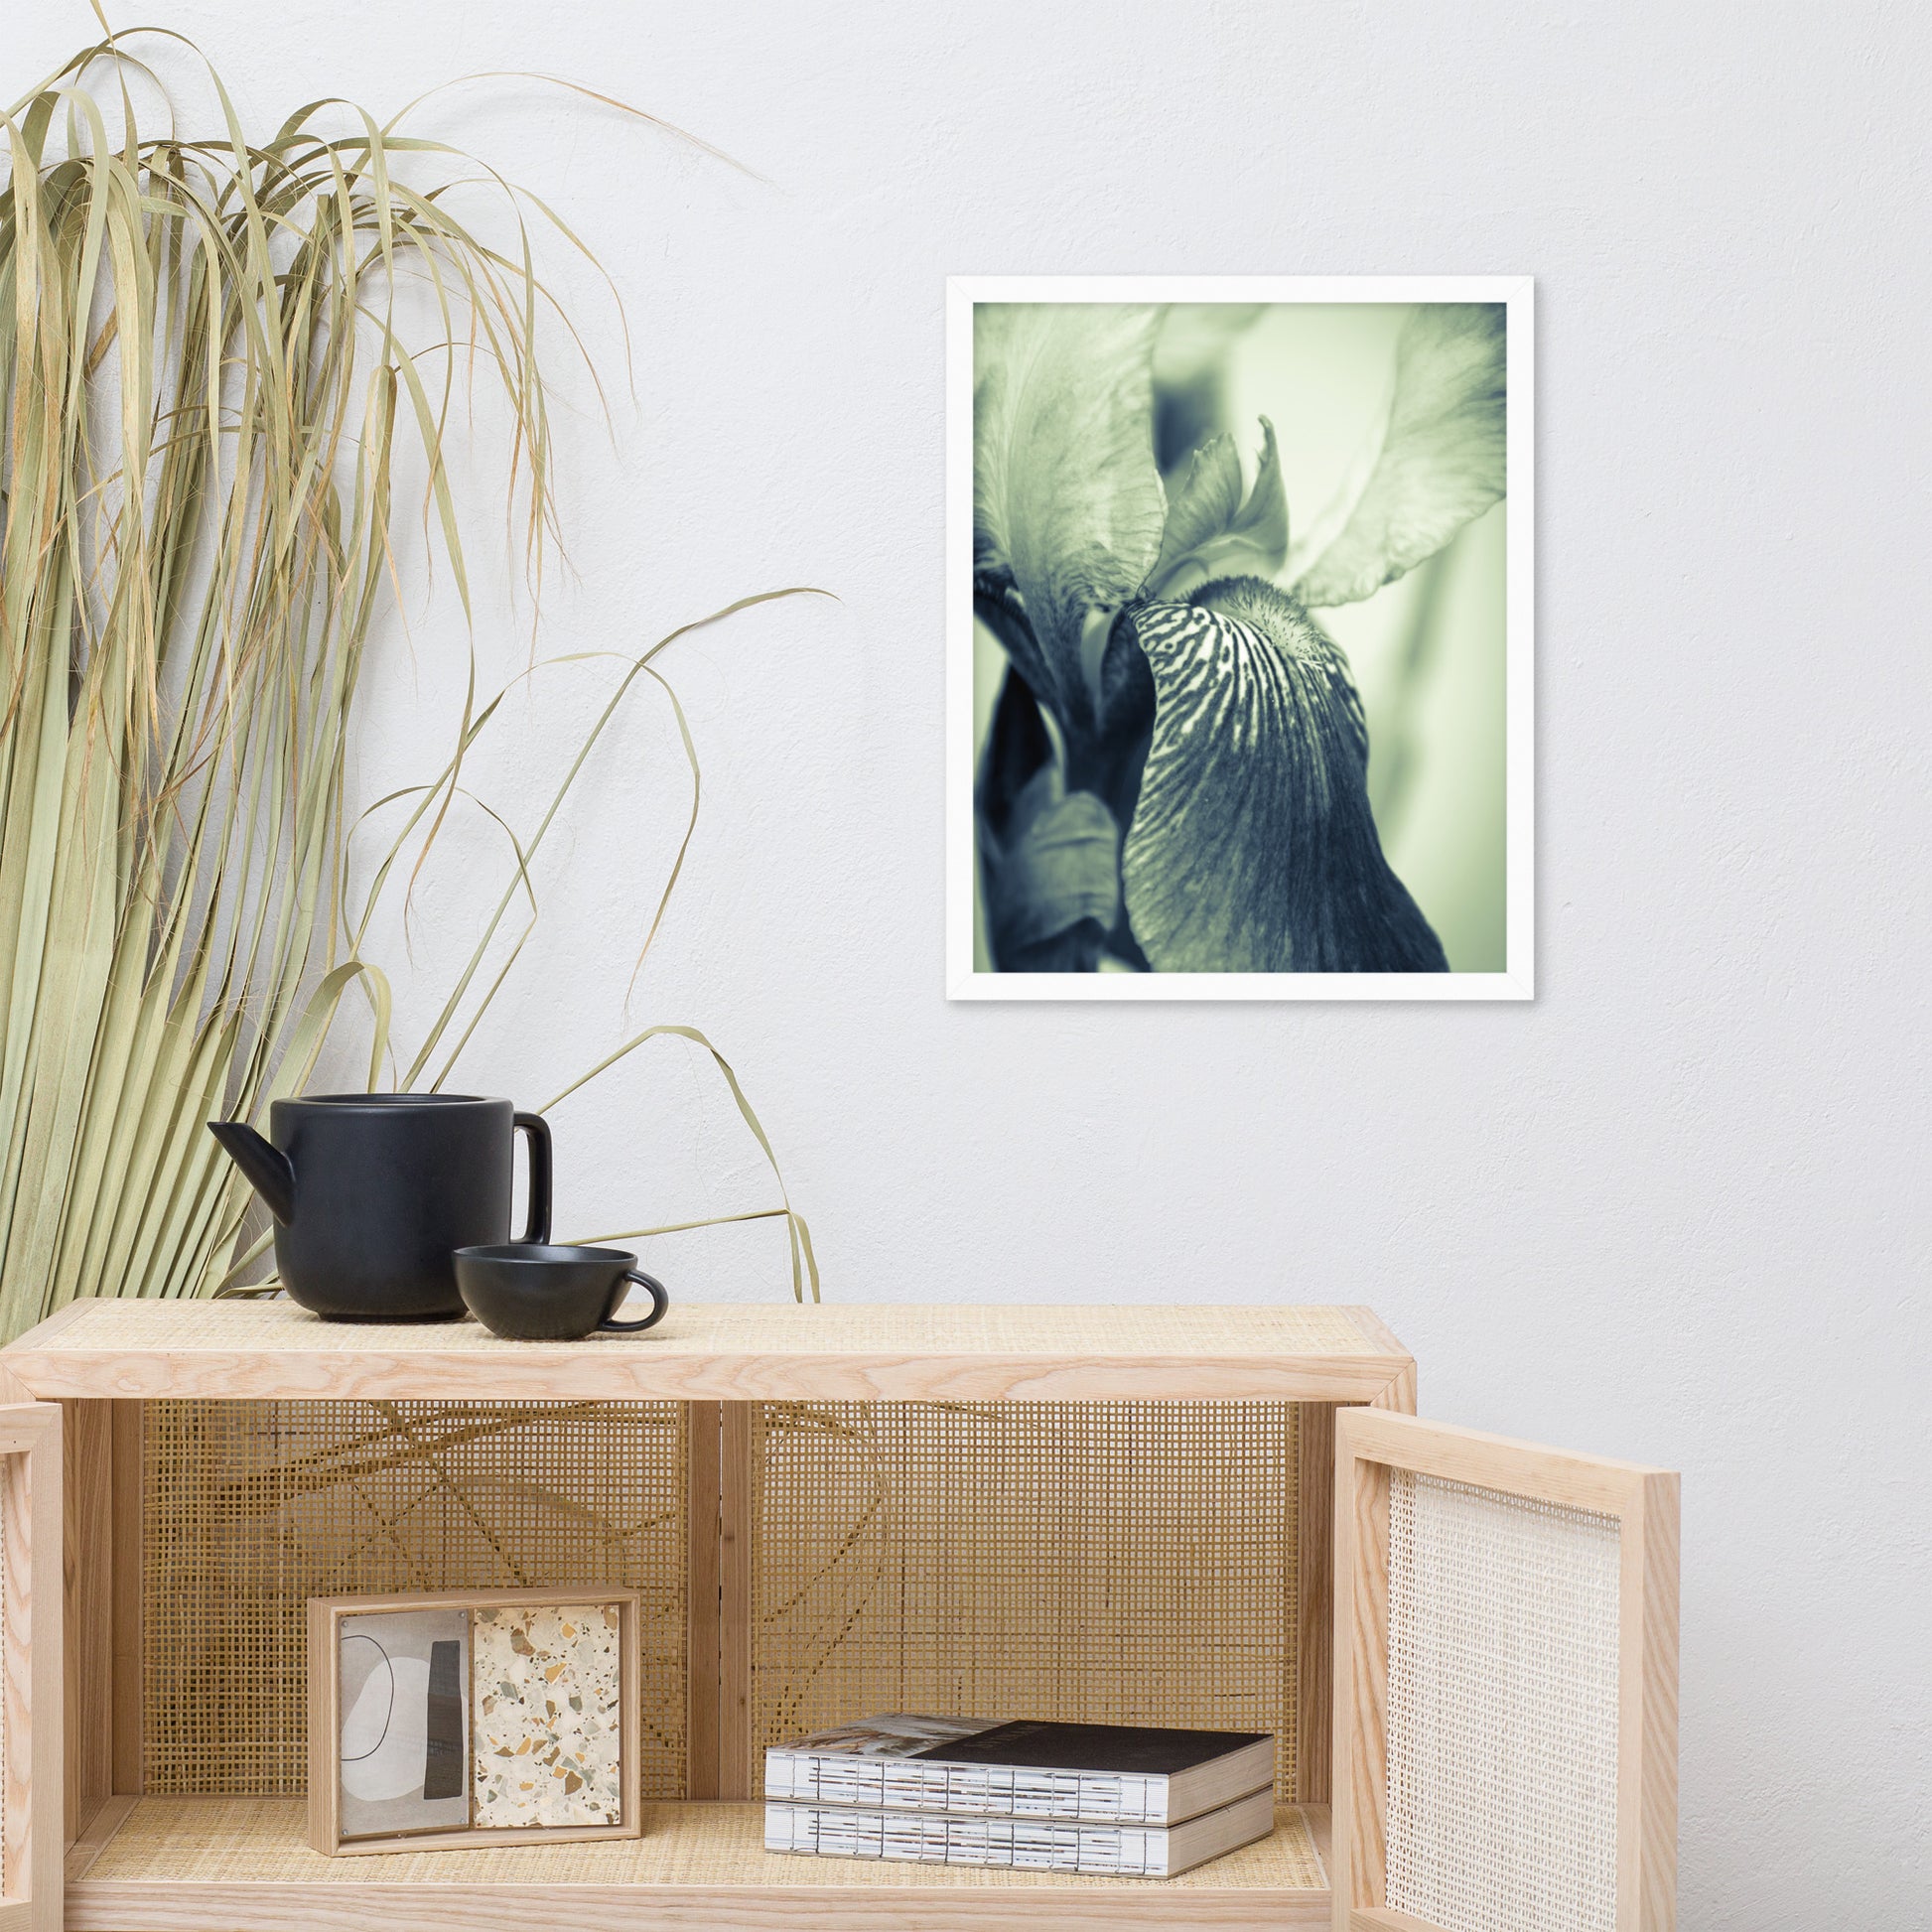 Dining Room Prints Ideas: Abstract Japanese Iris Delight- Botanical / Floral / Flora / Flowers / Nature Photograph Framed Wall Art Print - Artwork - Wall Decor - Home Decor